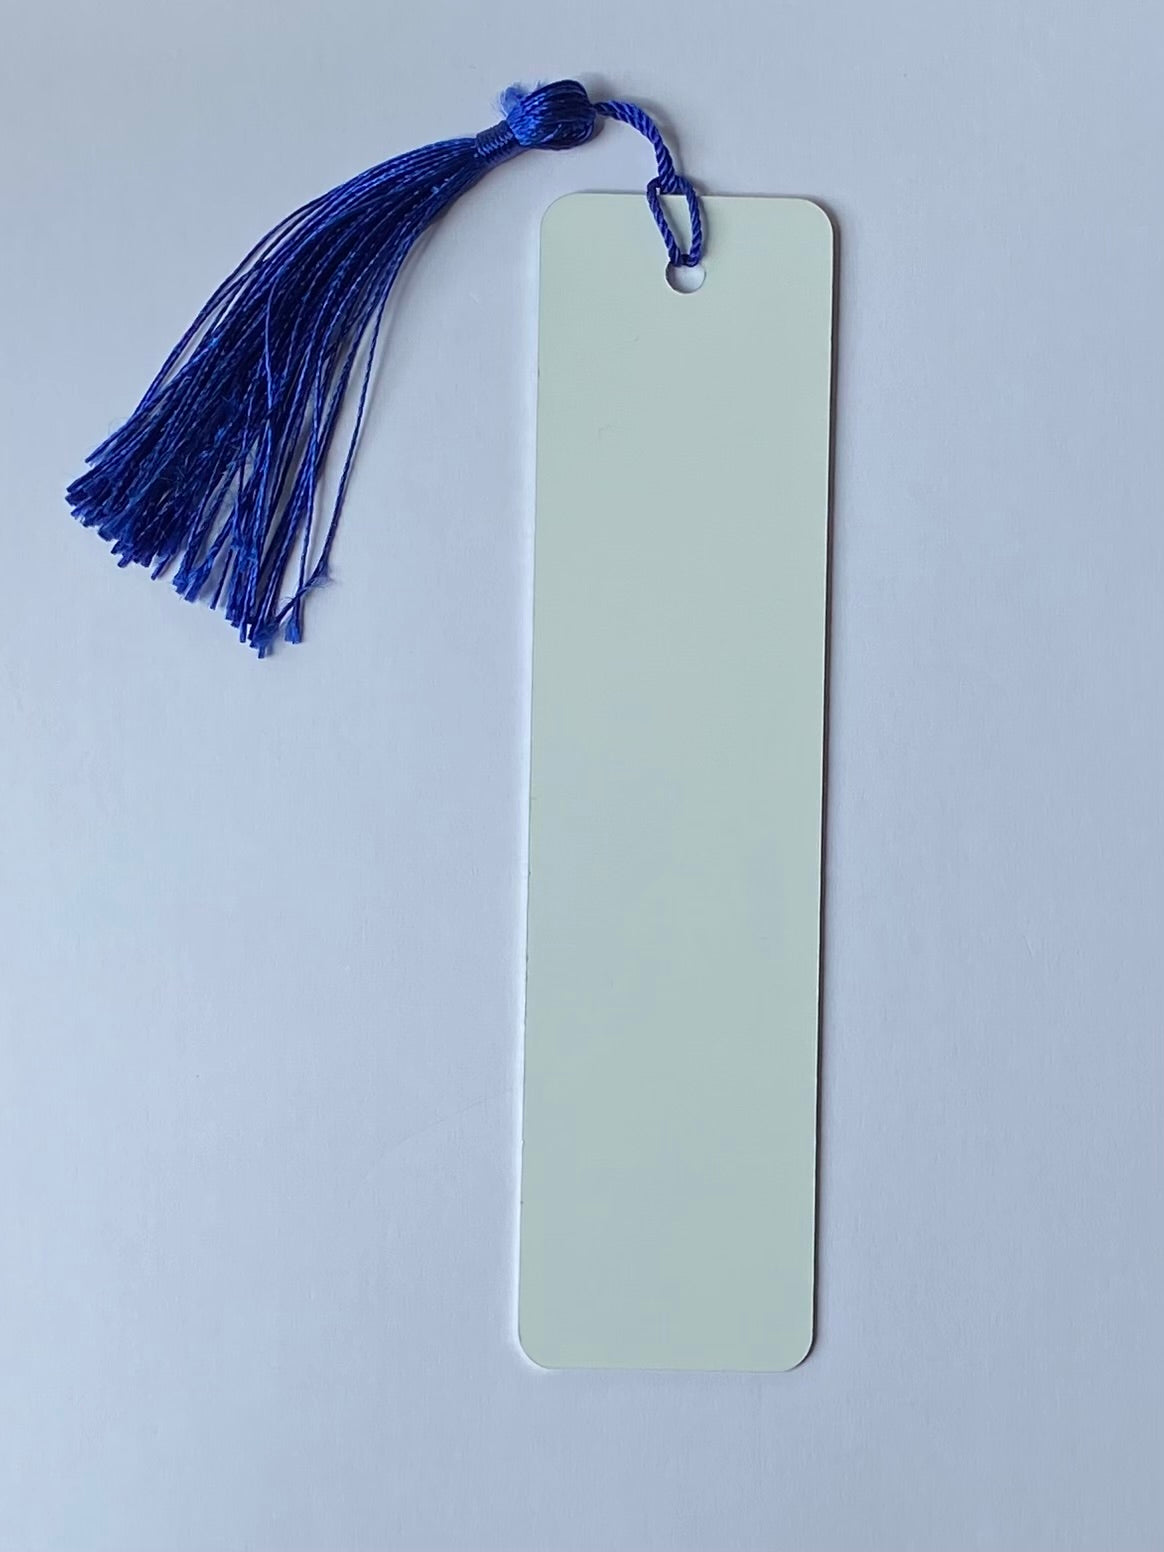 100 x Sublimation Aluminium Bookmark Double Sided 15.8cm x 3.8cm